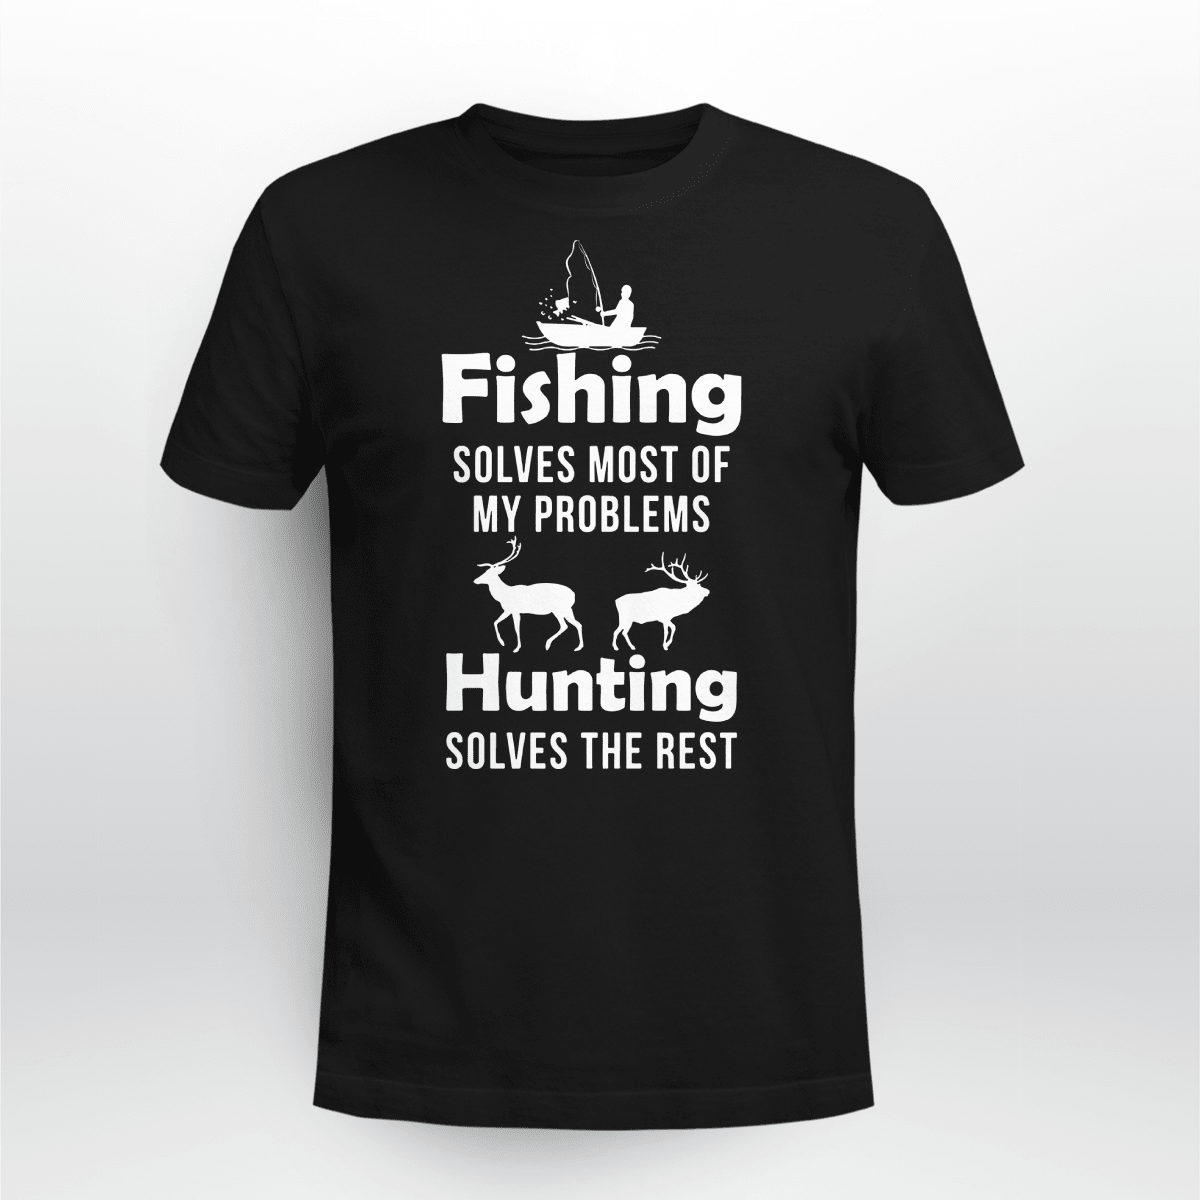 Hunting or Fishing